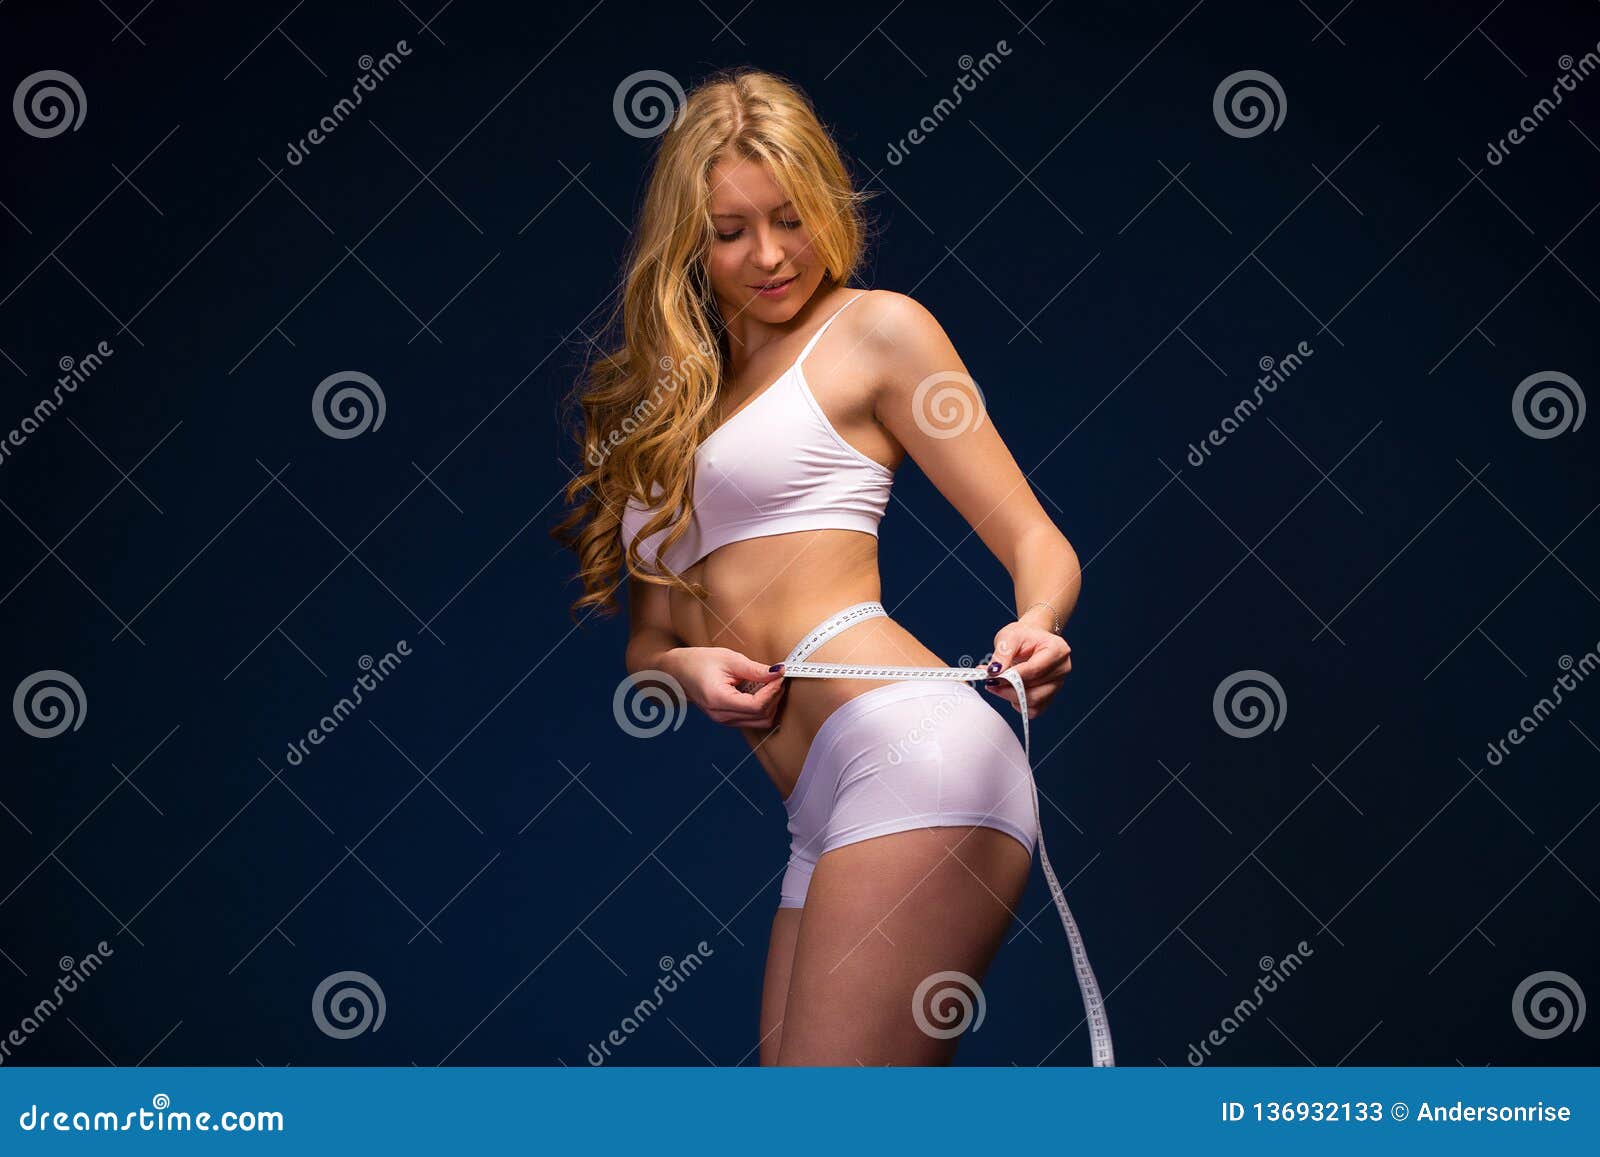 https://thumbs.dreamstime.com/z/young-beautiful-girl-posing-nude-studio-standing-blue-dress-near-white-wall-136932133.jpg